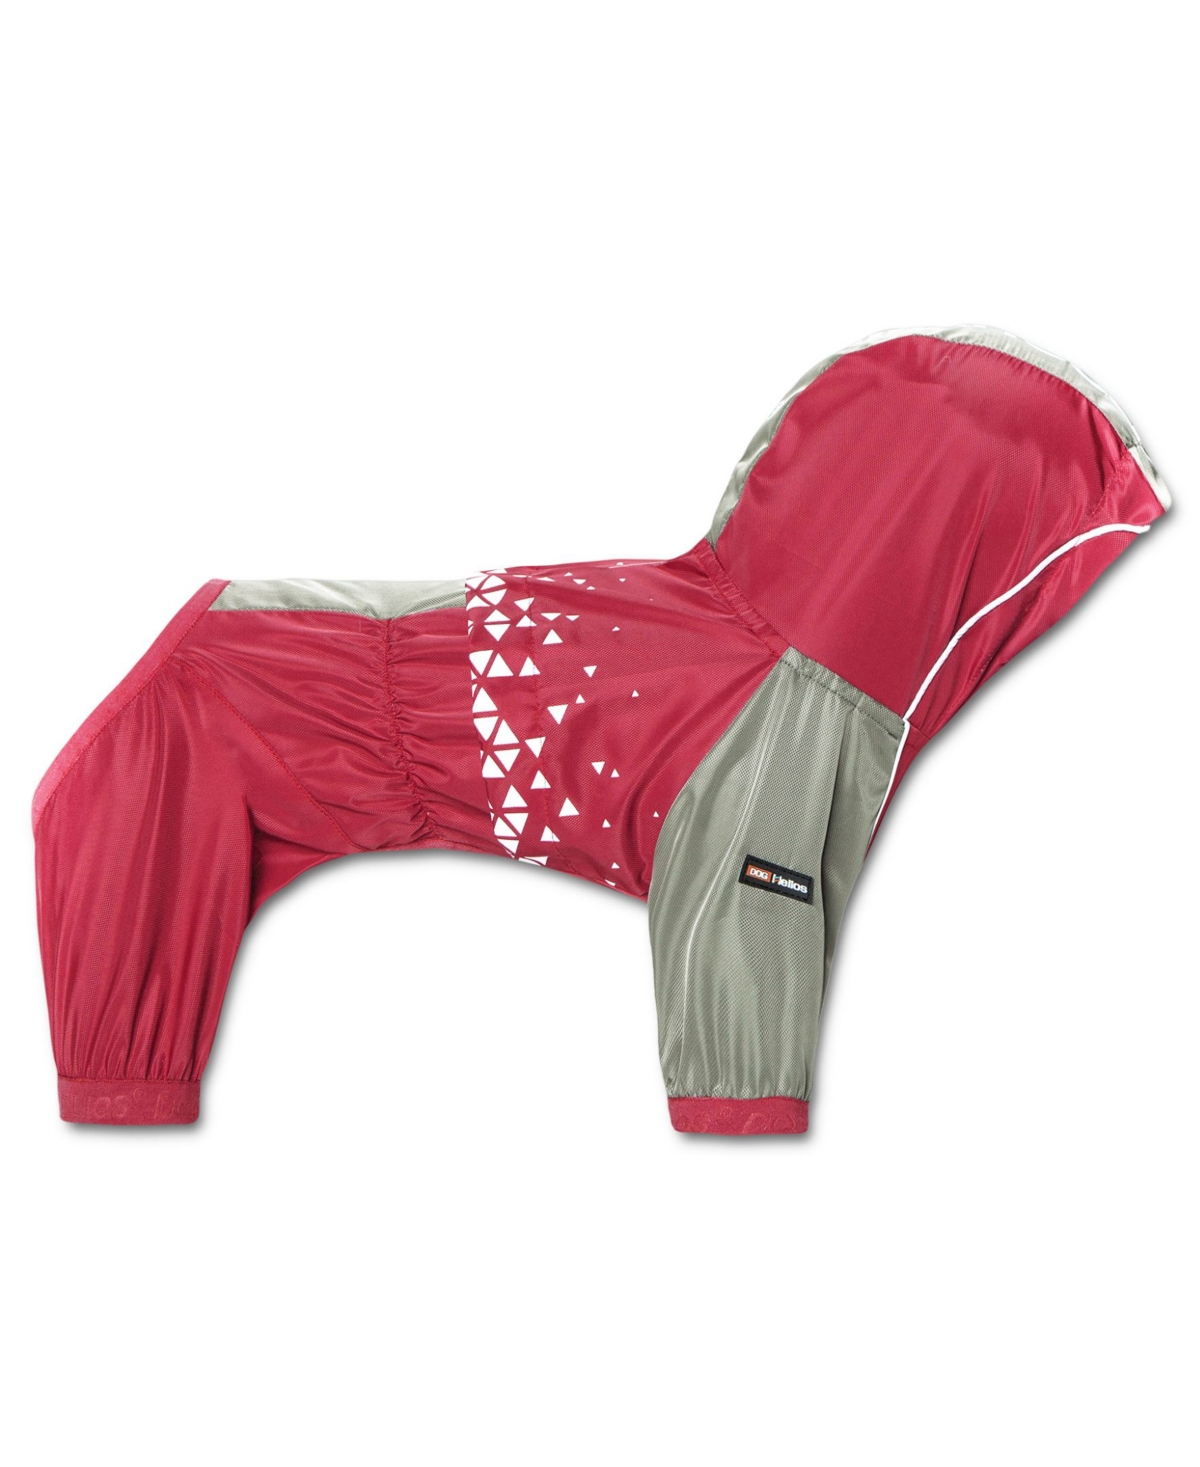 'Vortex' Full Bodied Water-resistant Windbreaker Dog Jacket - Red